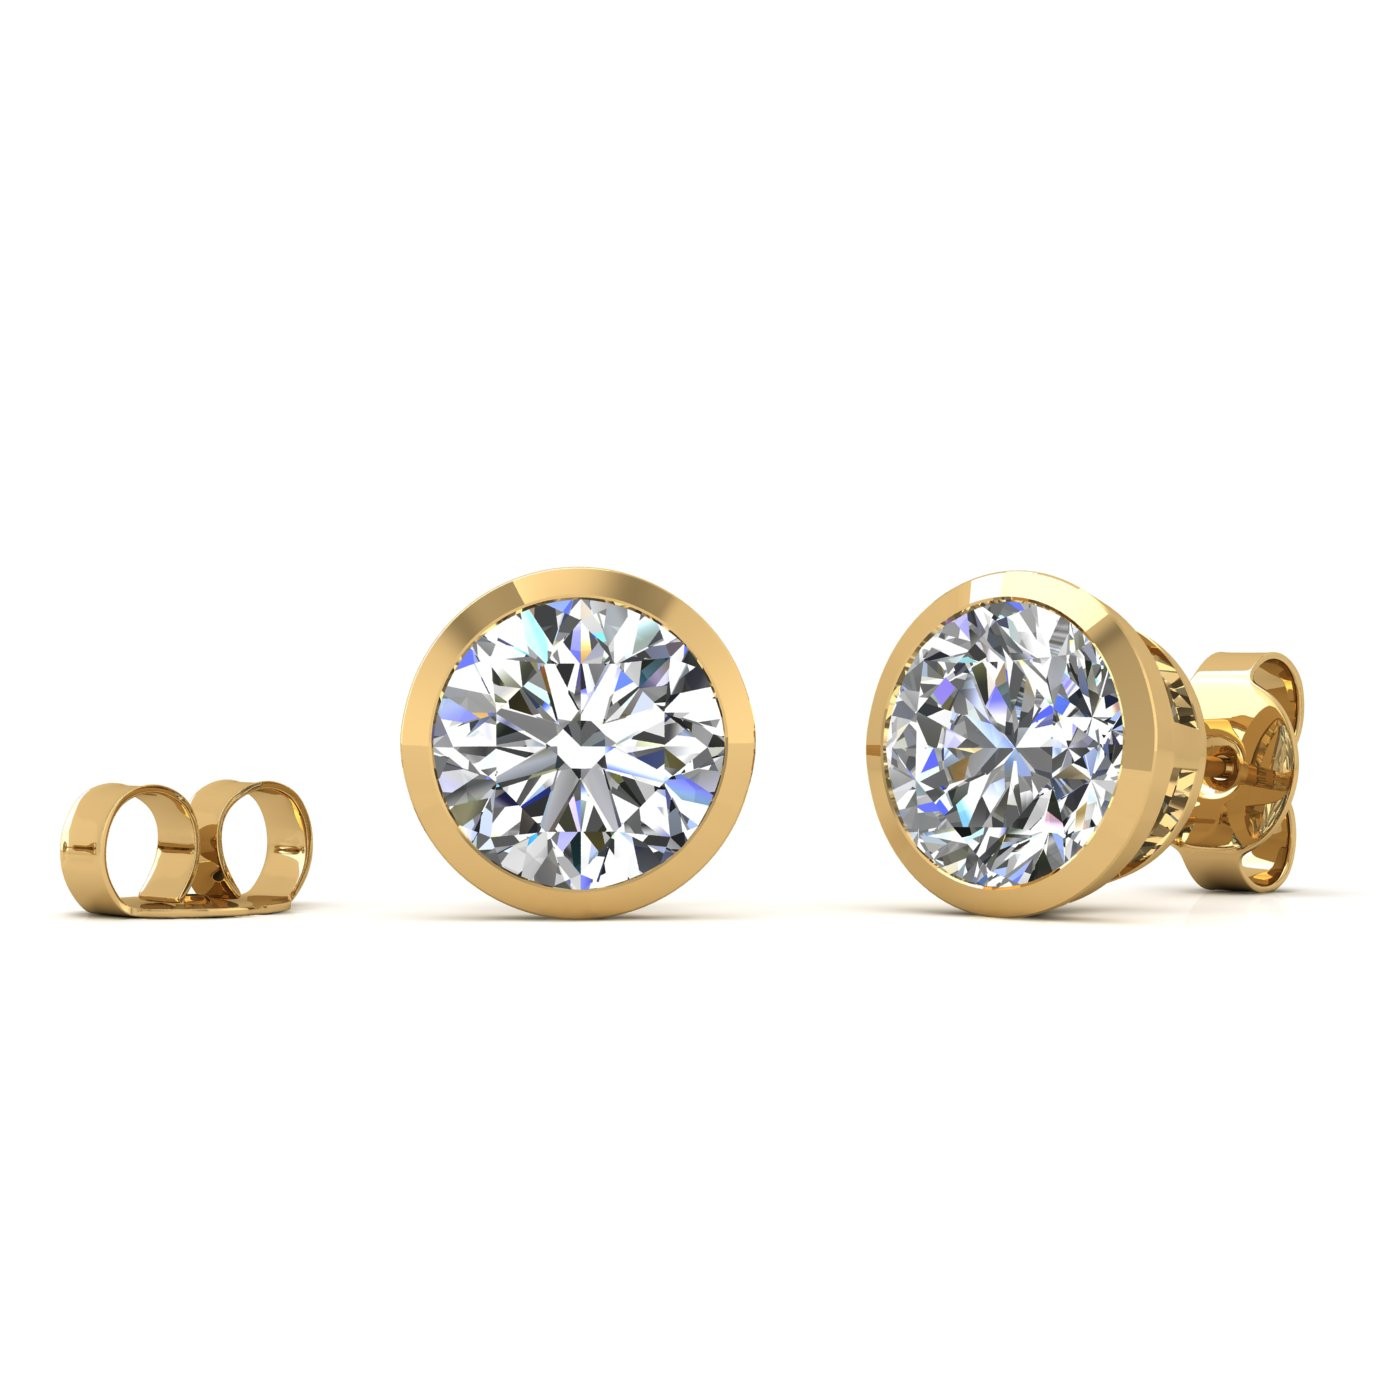 18k yellow gold 0,5 ct each (1,0 tcw) round brilliant cut diamond bezel set earring studs Photos & images